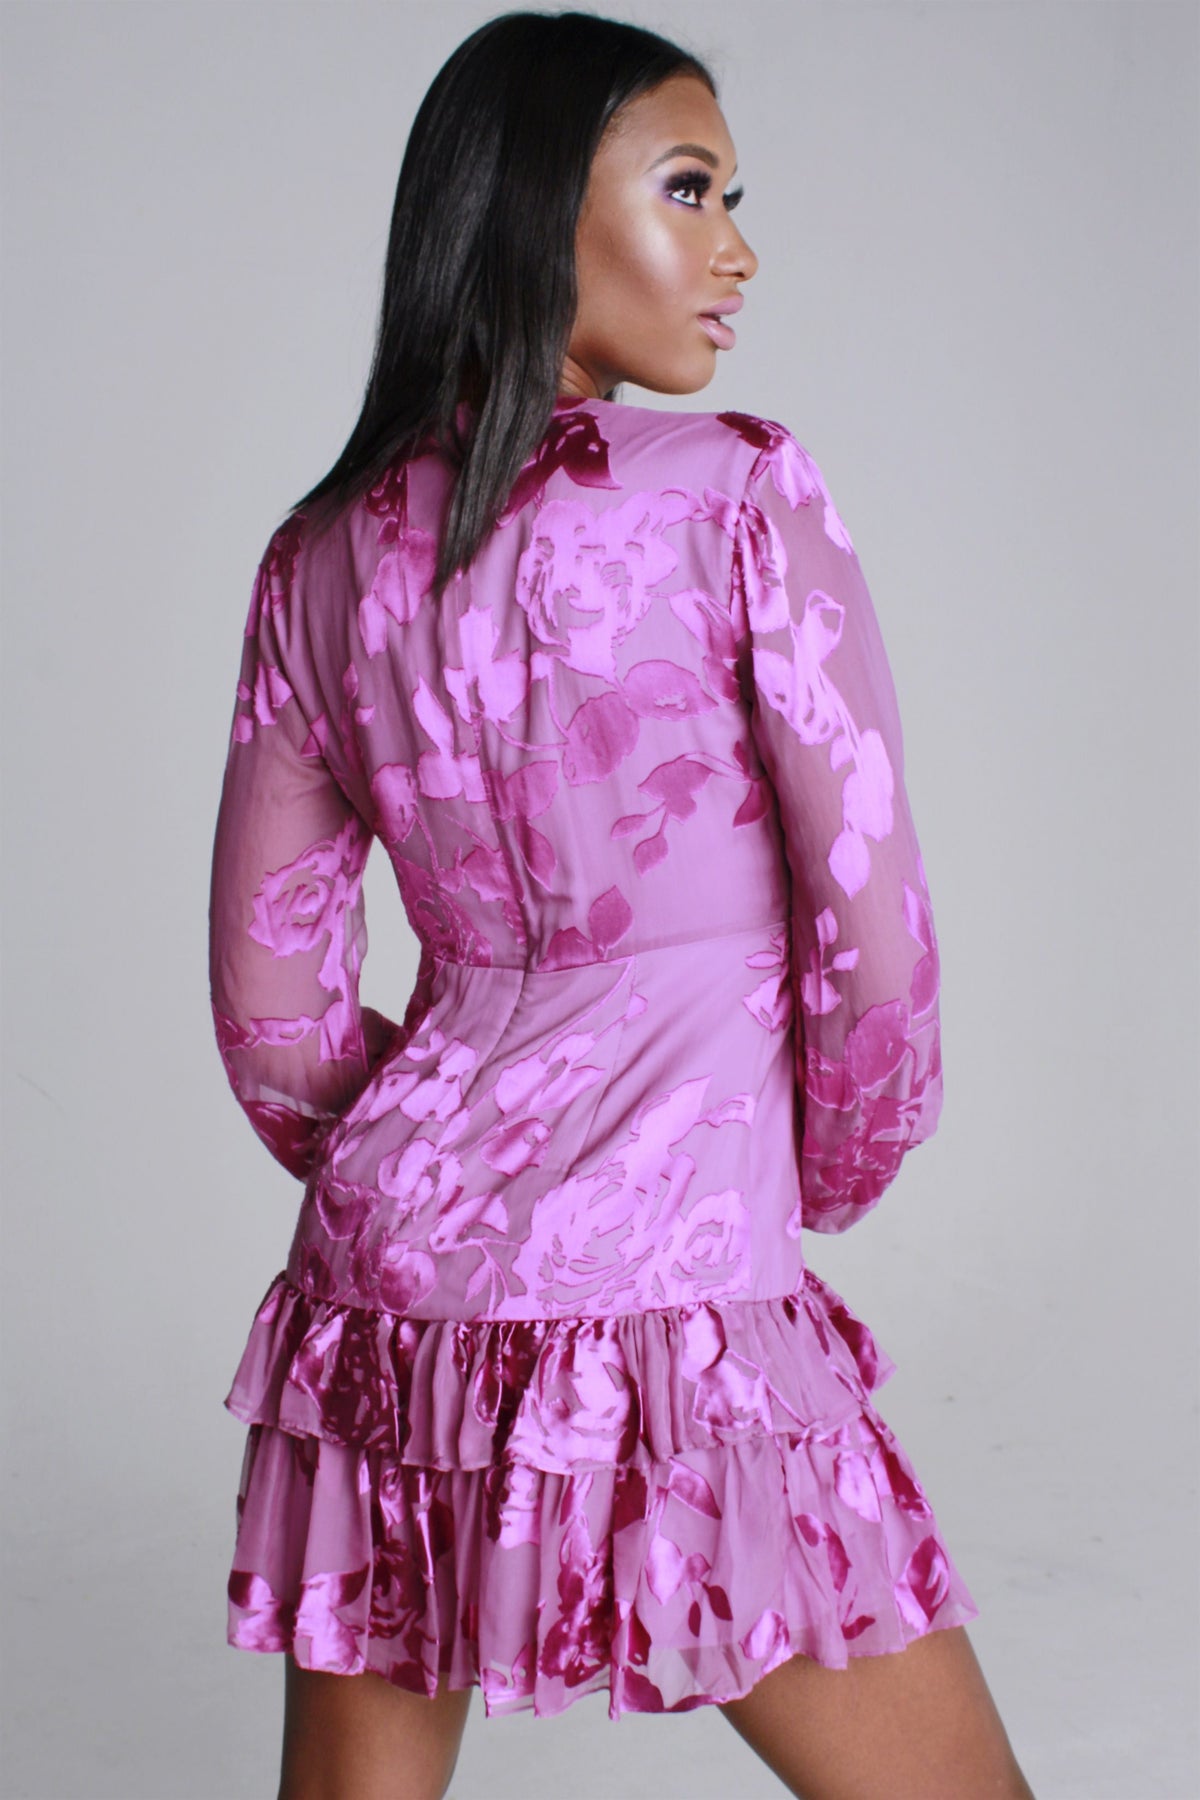 Alexis Emma Dress in Lilac Devore - Tiff'sLux Re